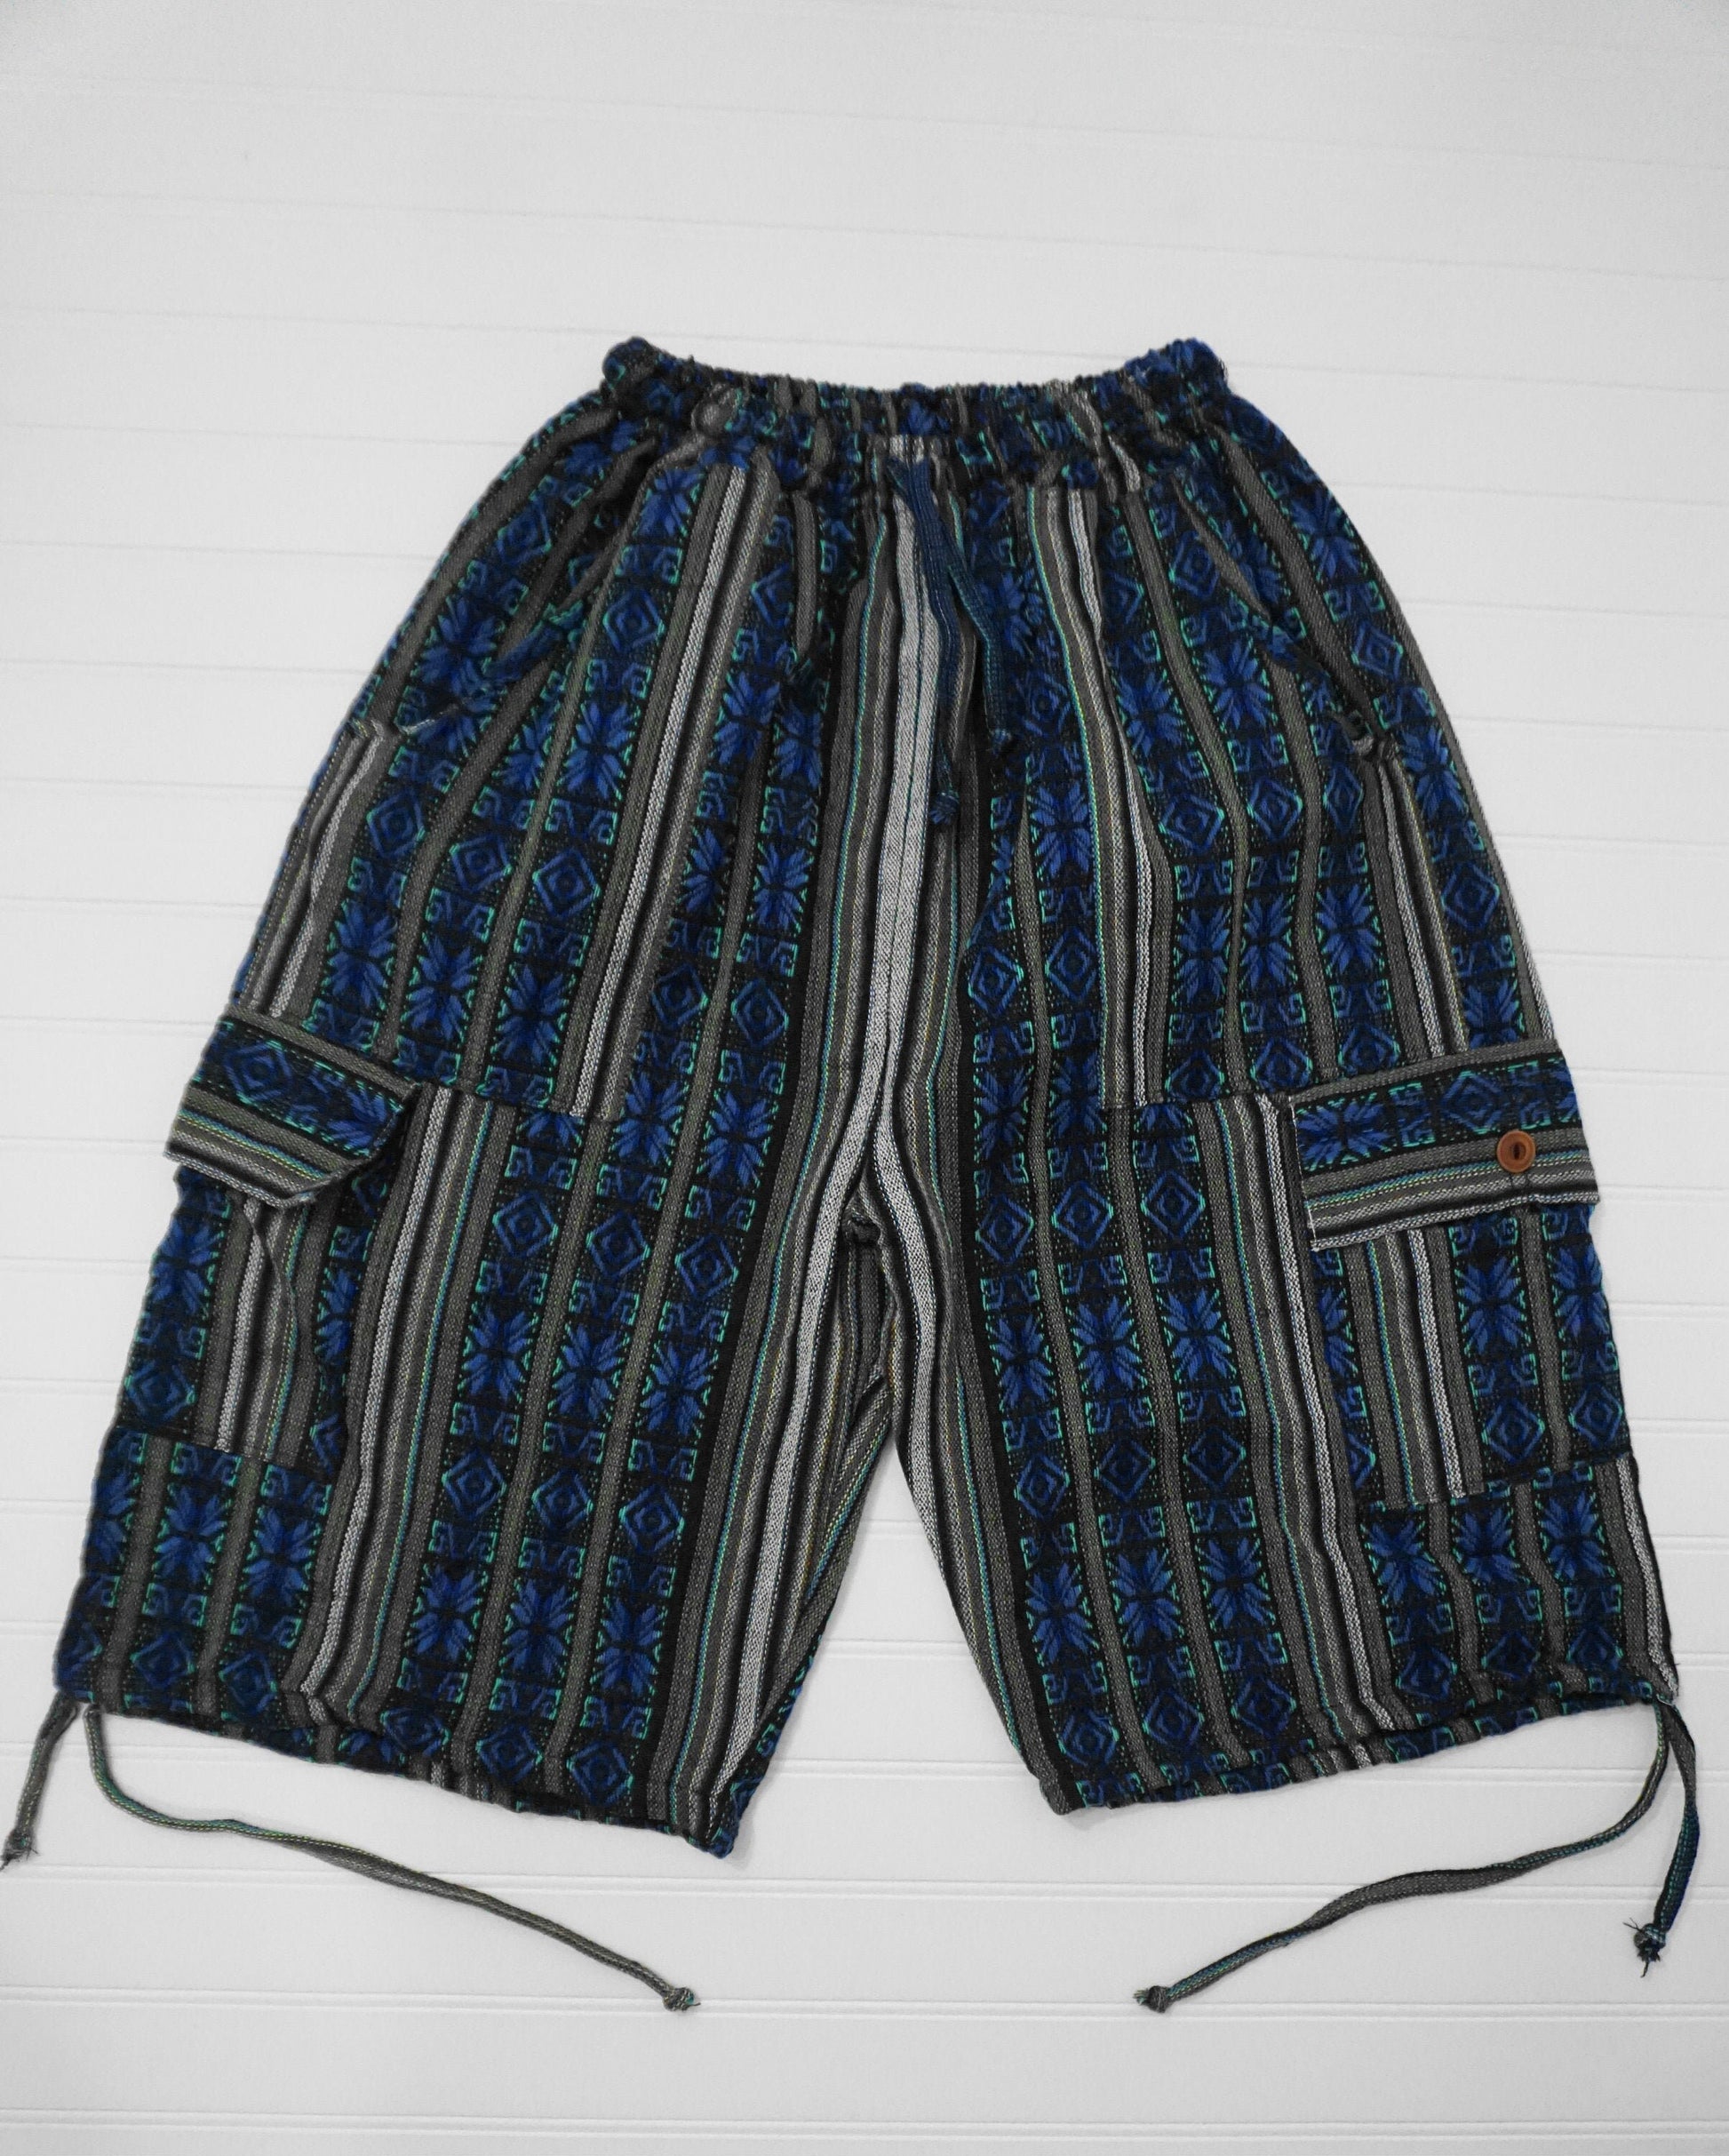 Shorts Size M | Boho Clothing | Blue Turquoise | Lounge Wear Shorts for Women or Men | Cargo Shorts | Father's Day Gift